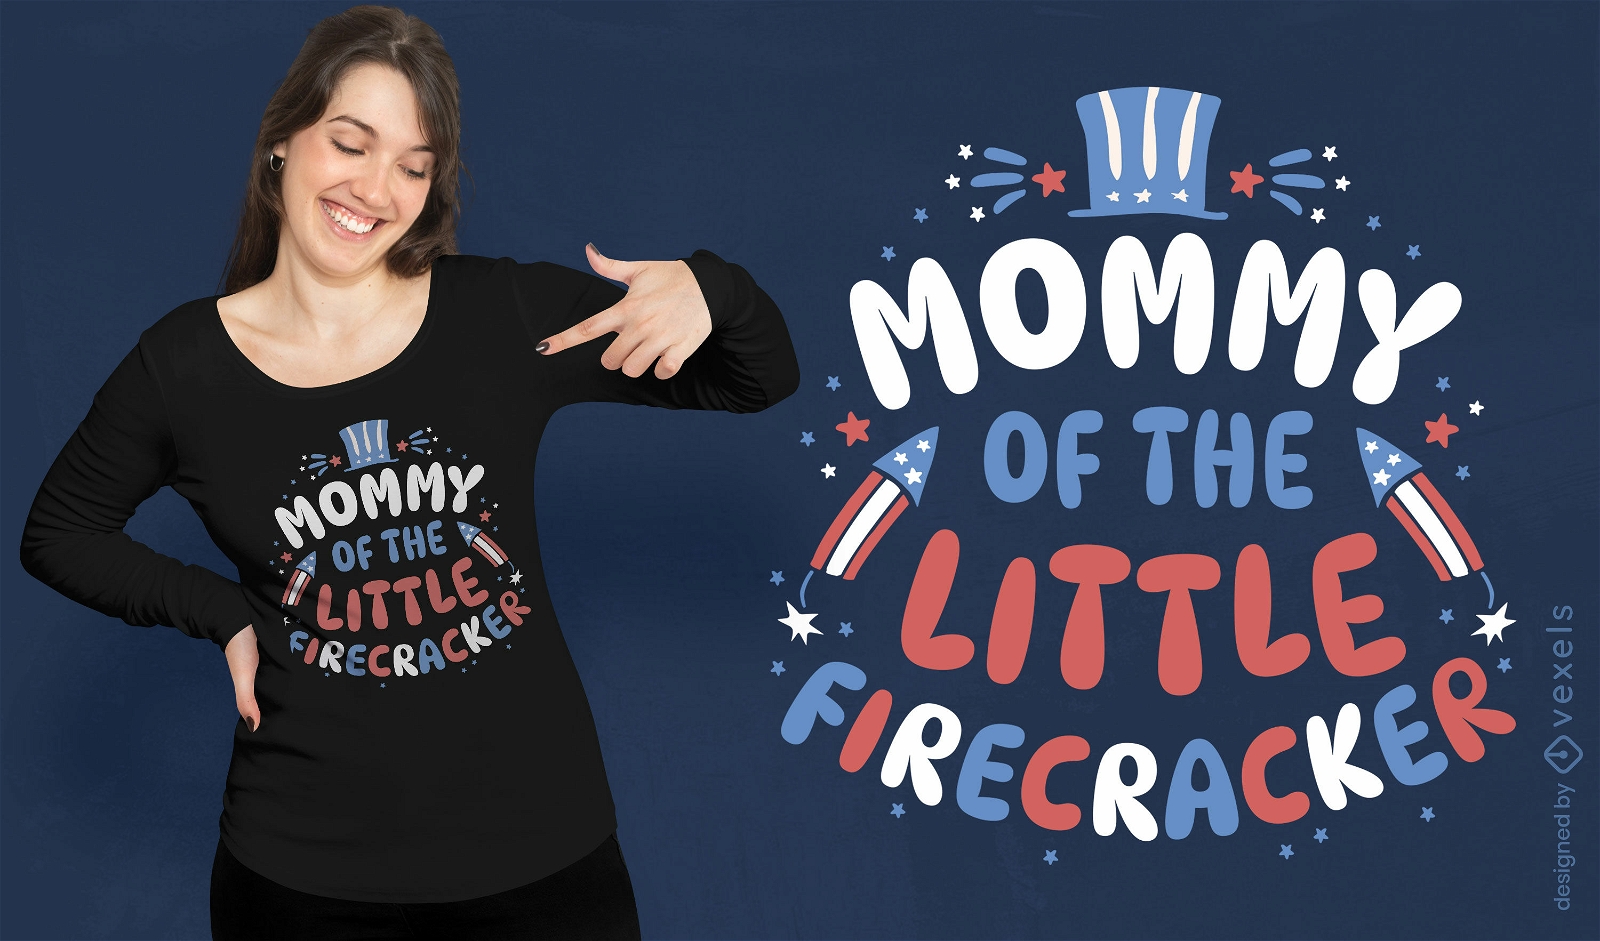 Mommy of the little firecracker t-shirt design